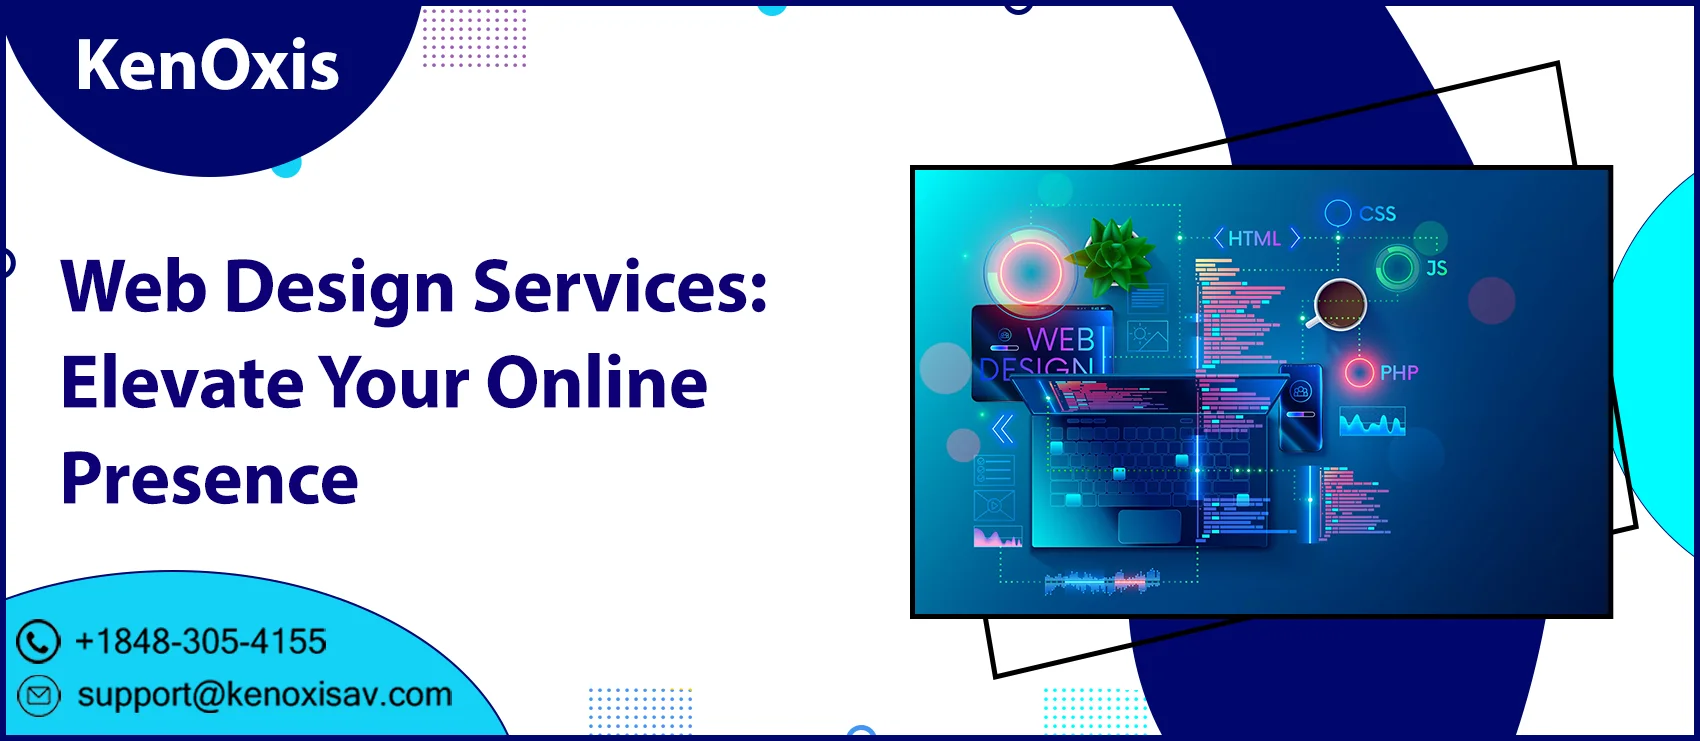 Web Design Services: Elevate Your Online Presence